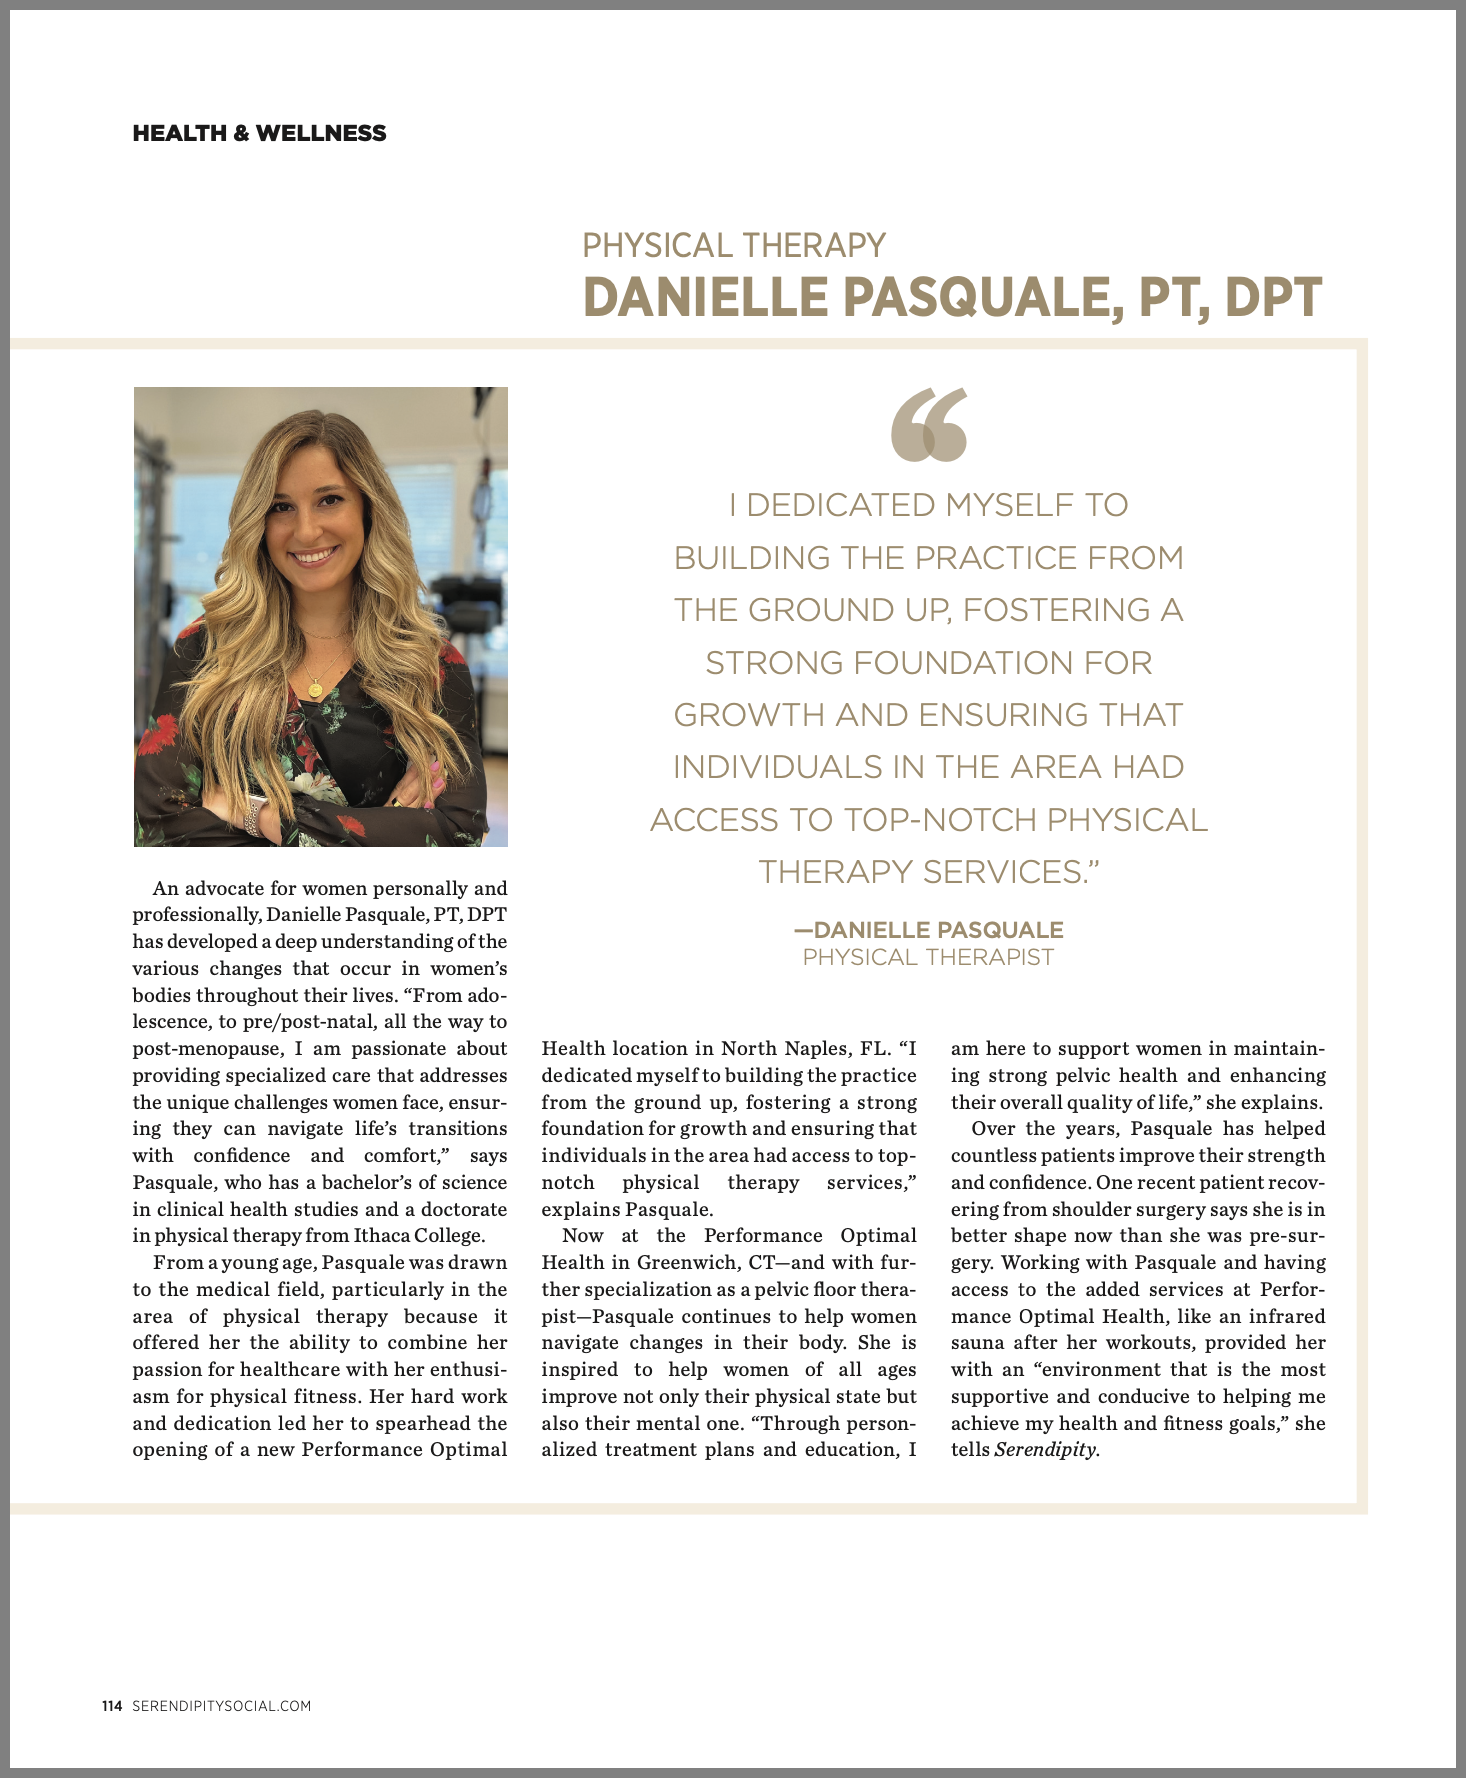 Serendipity Magazine featured Danielle Pasquale